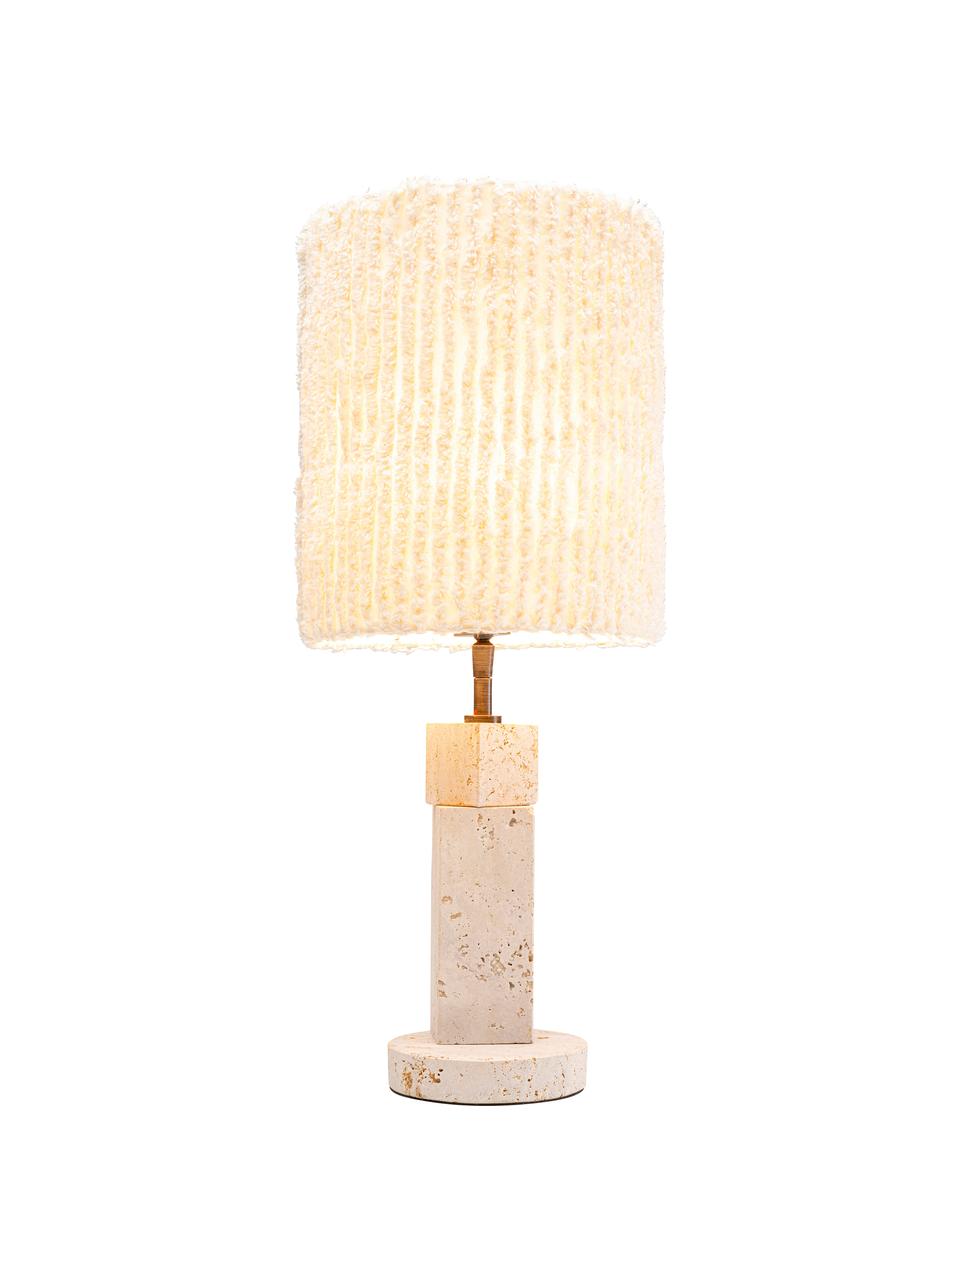 Grand lampe à poser Lipsi, Blanc crème, travertin beige clair, Ø 24 x haut. 58 cm